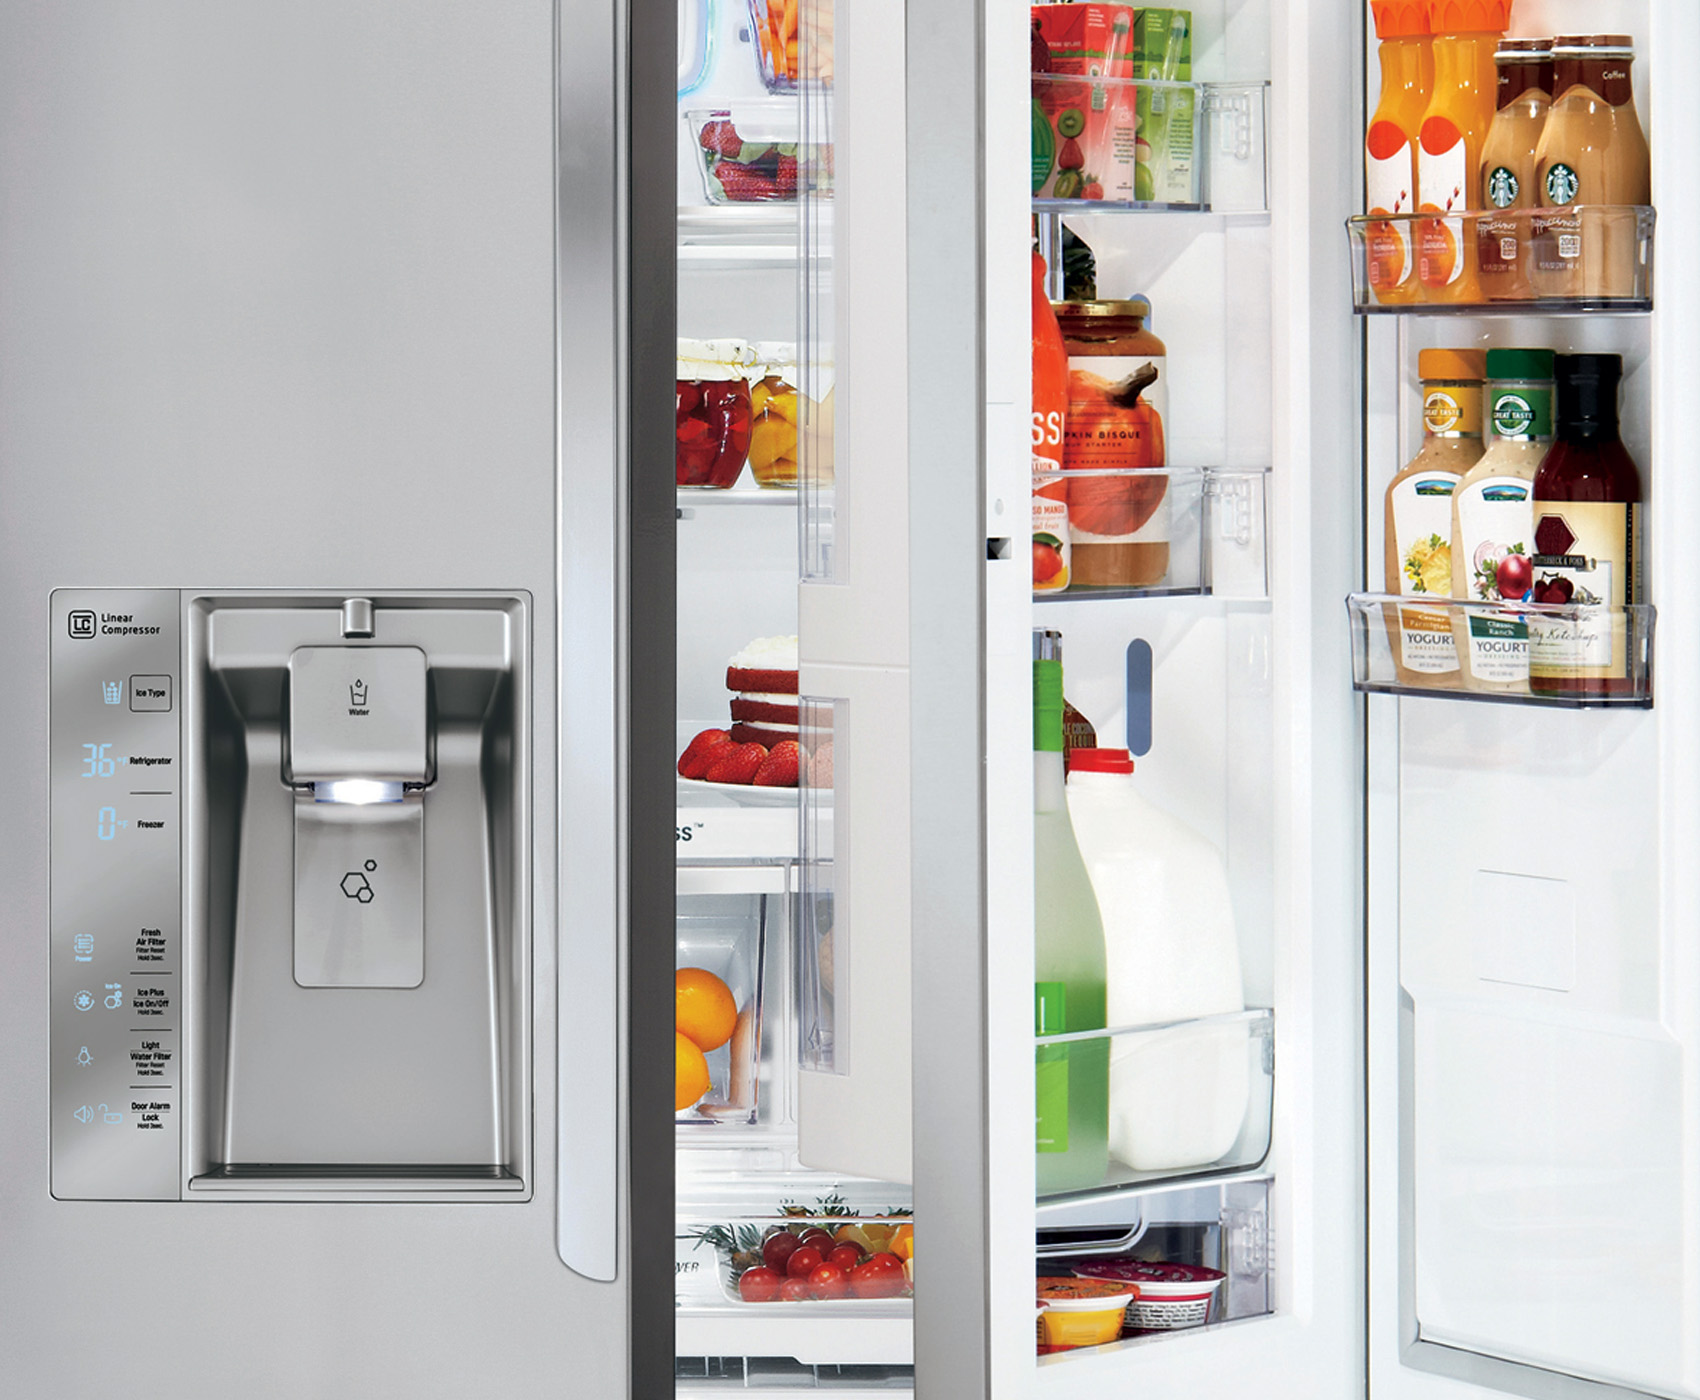 How To Reset LG Refrigerator 1.0